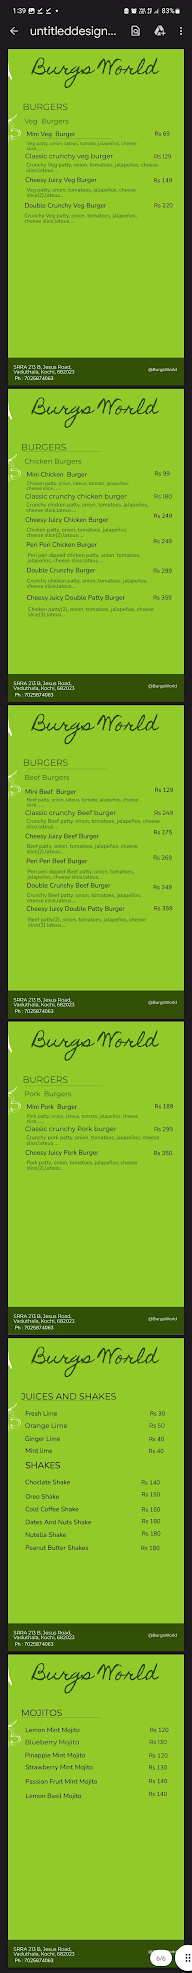 Burgs World menu 3